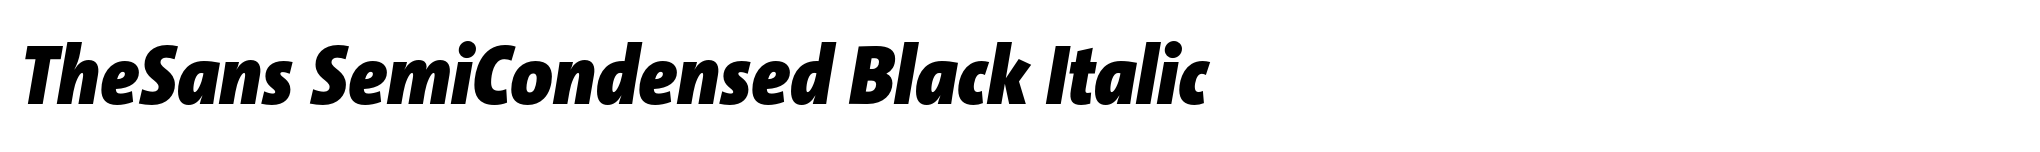 TheSans SemiCondensed Black Italic image